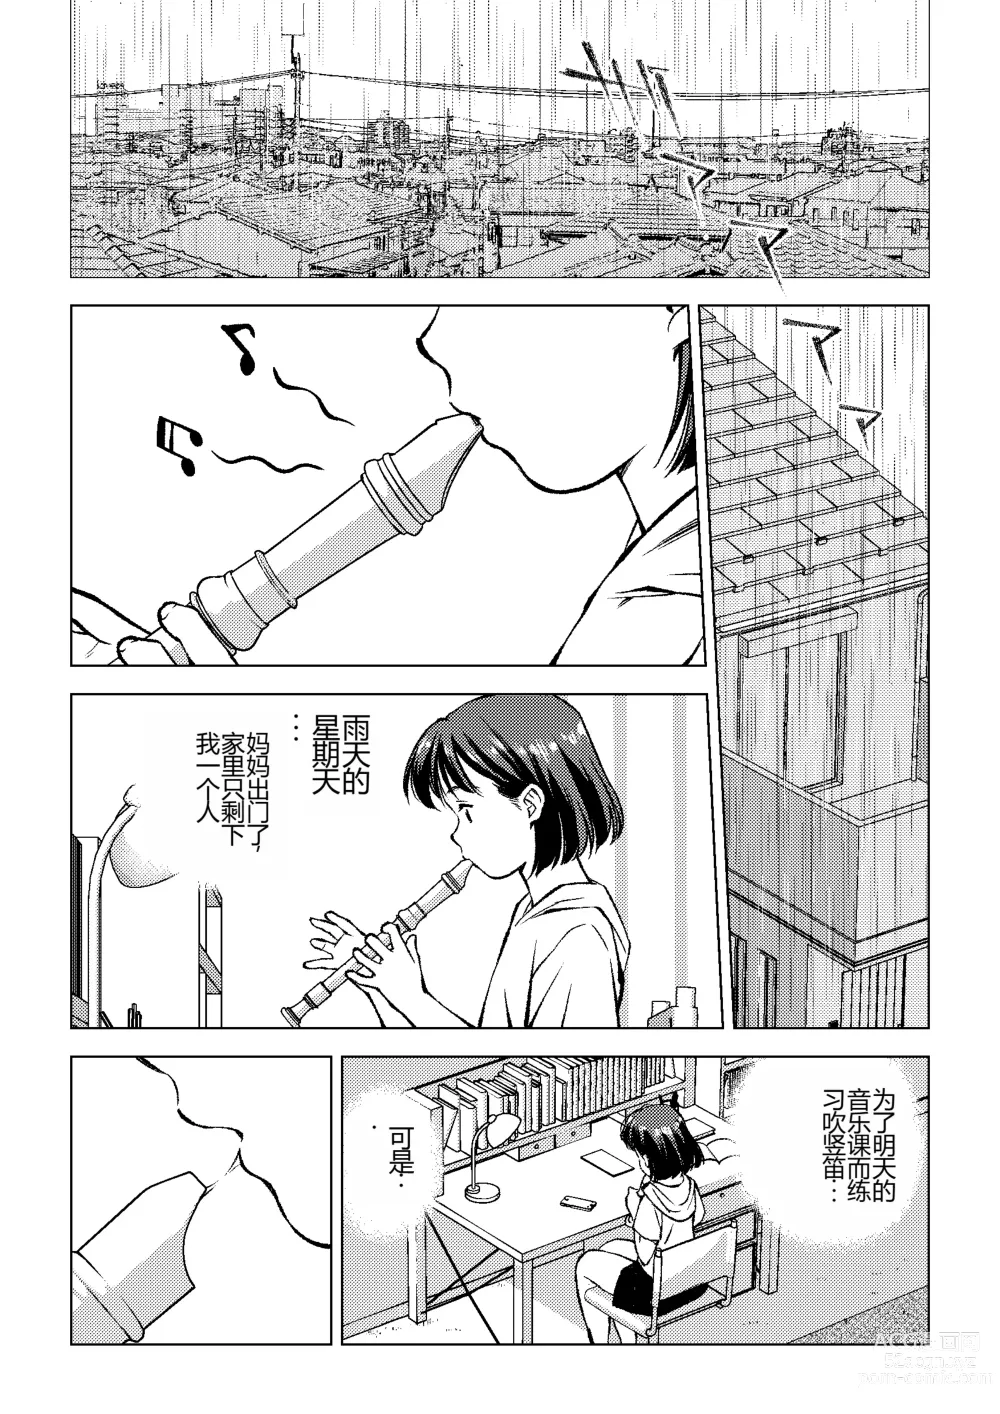 Page 2 of doujinshi Okada-san no Shippo